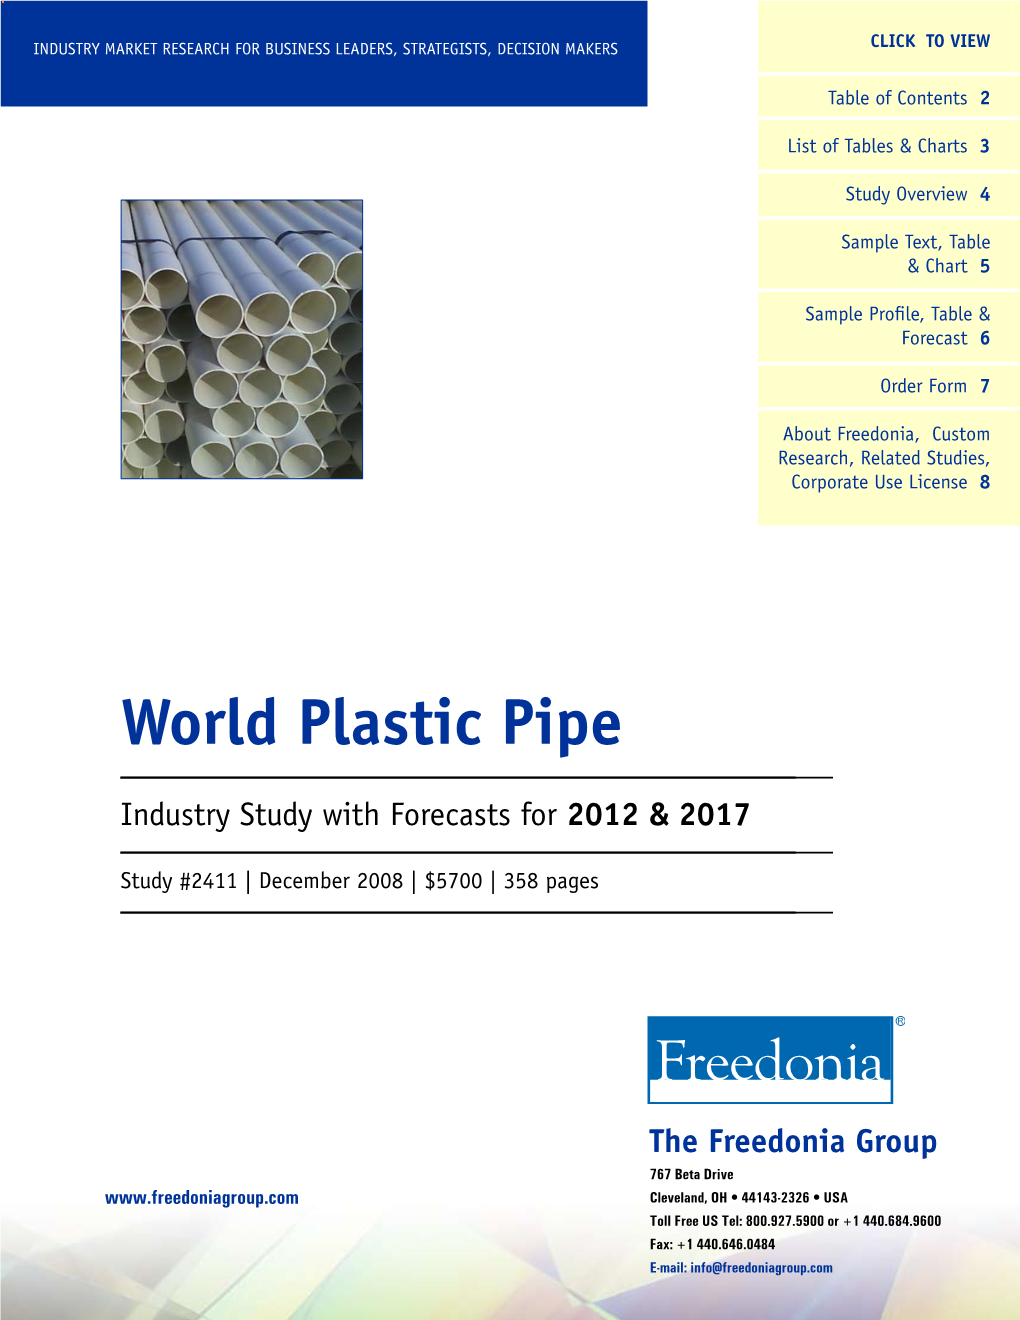 World Plastic Pipe